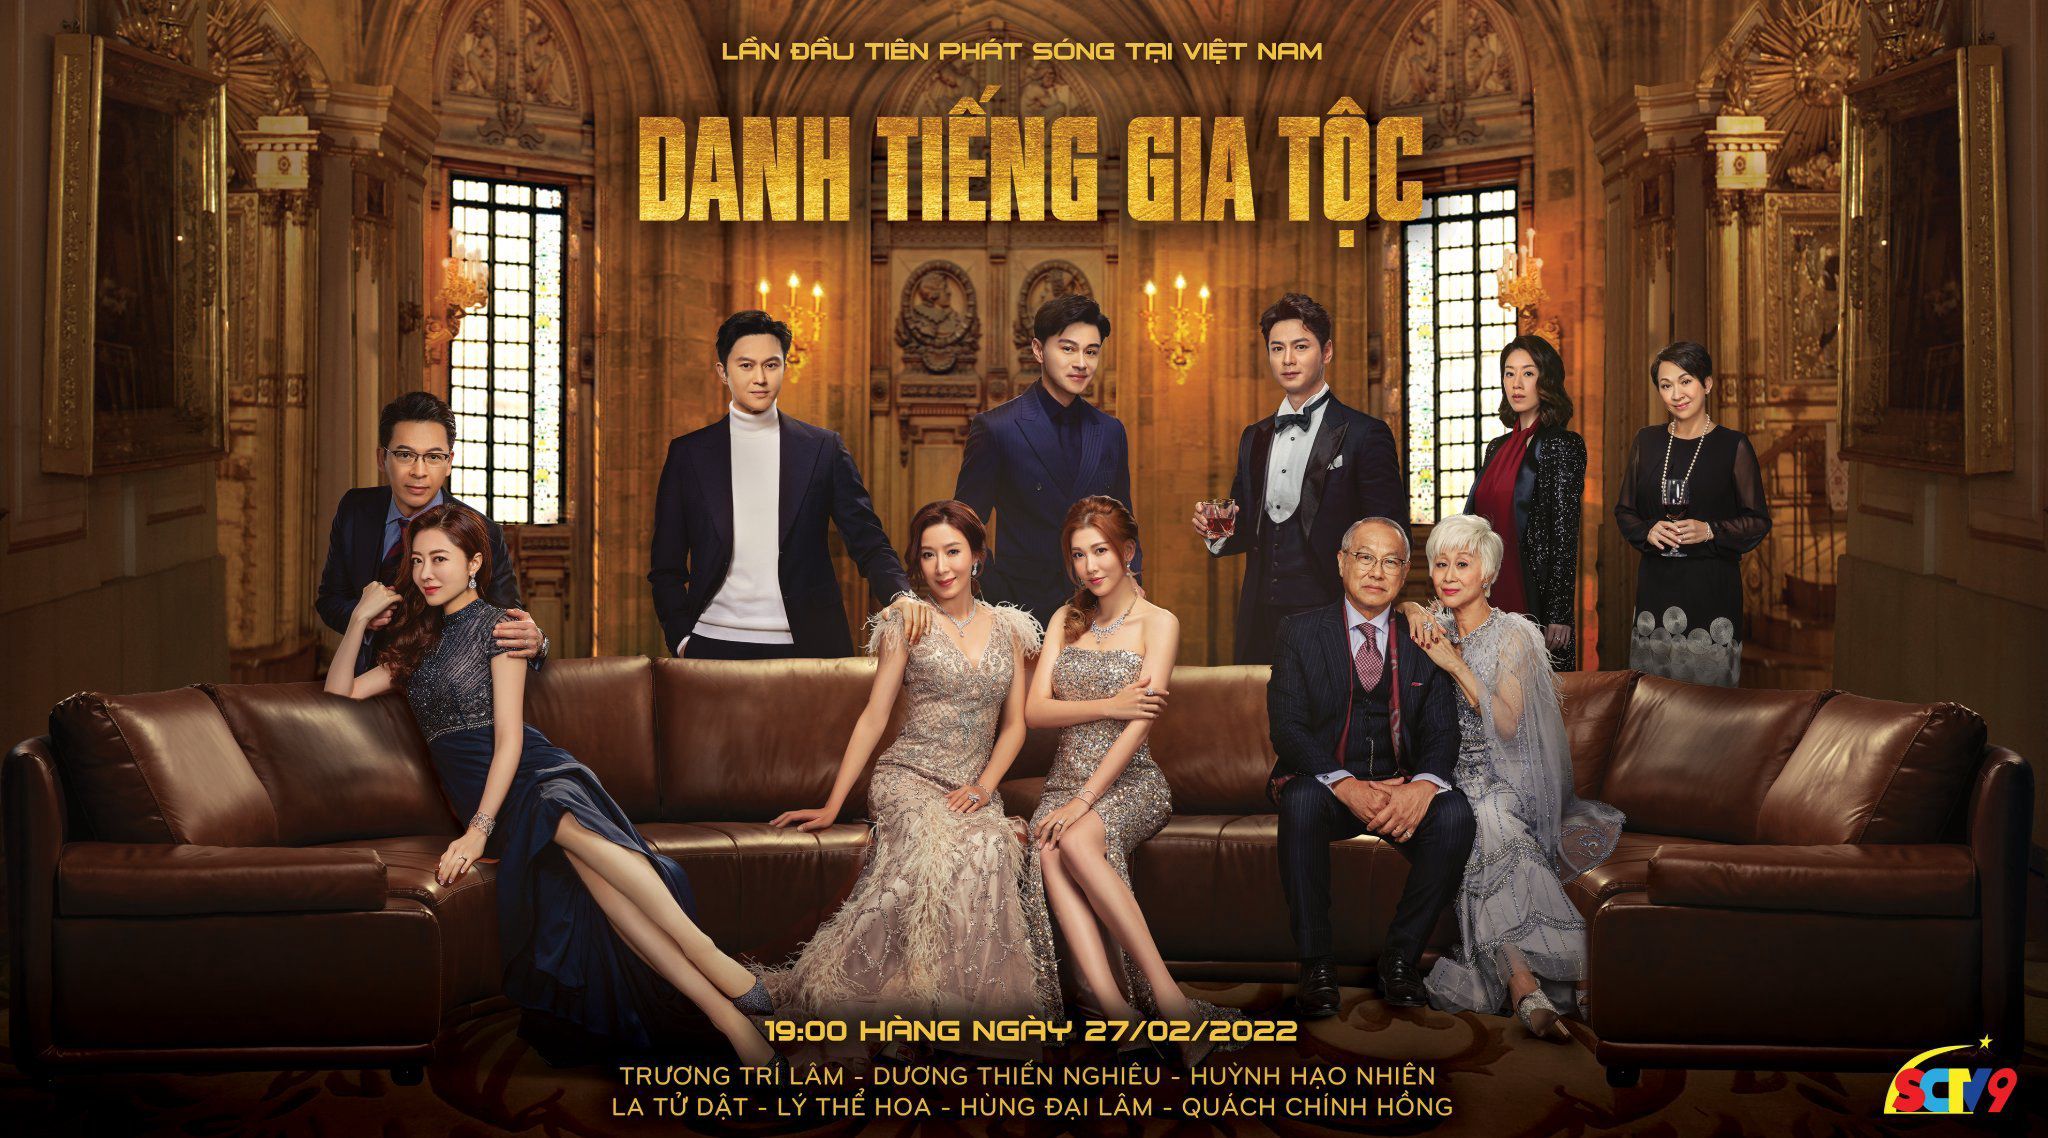 Banner Phim Gia Tộc Vinh Diệu (Modern Dynasty)